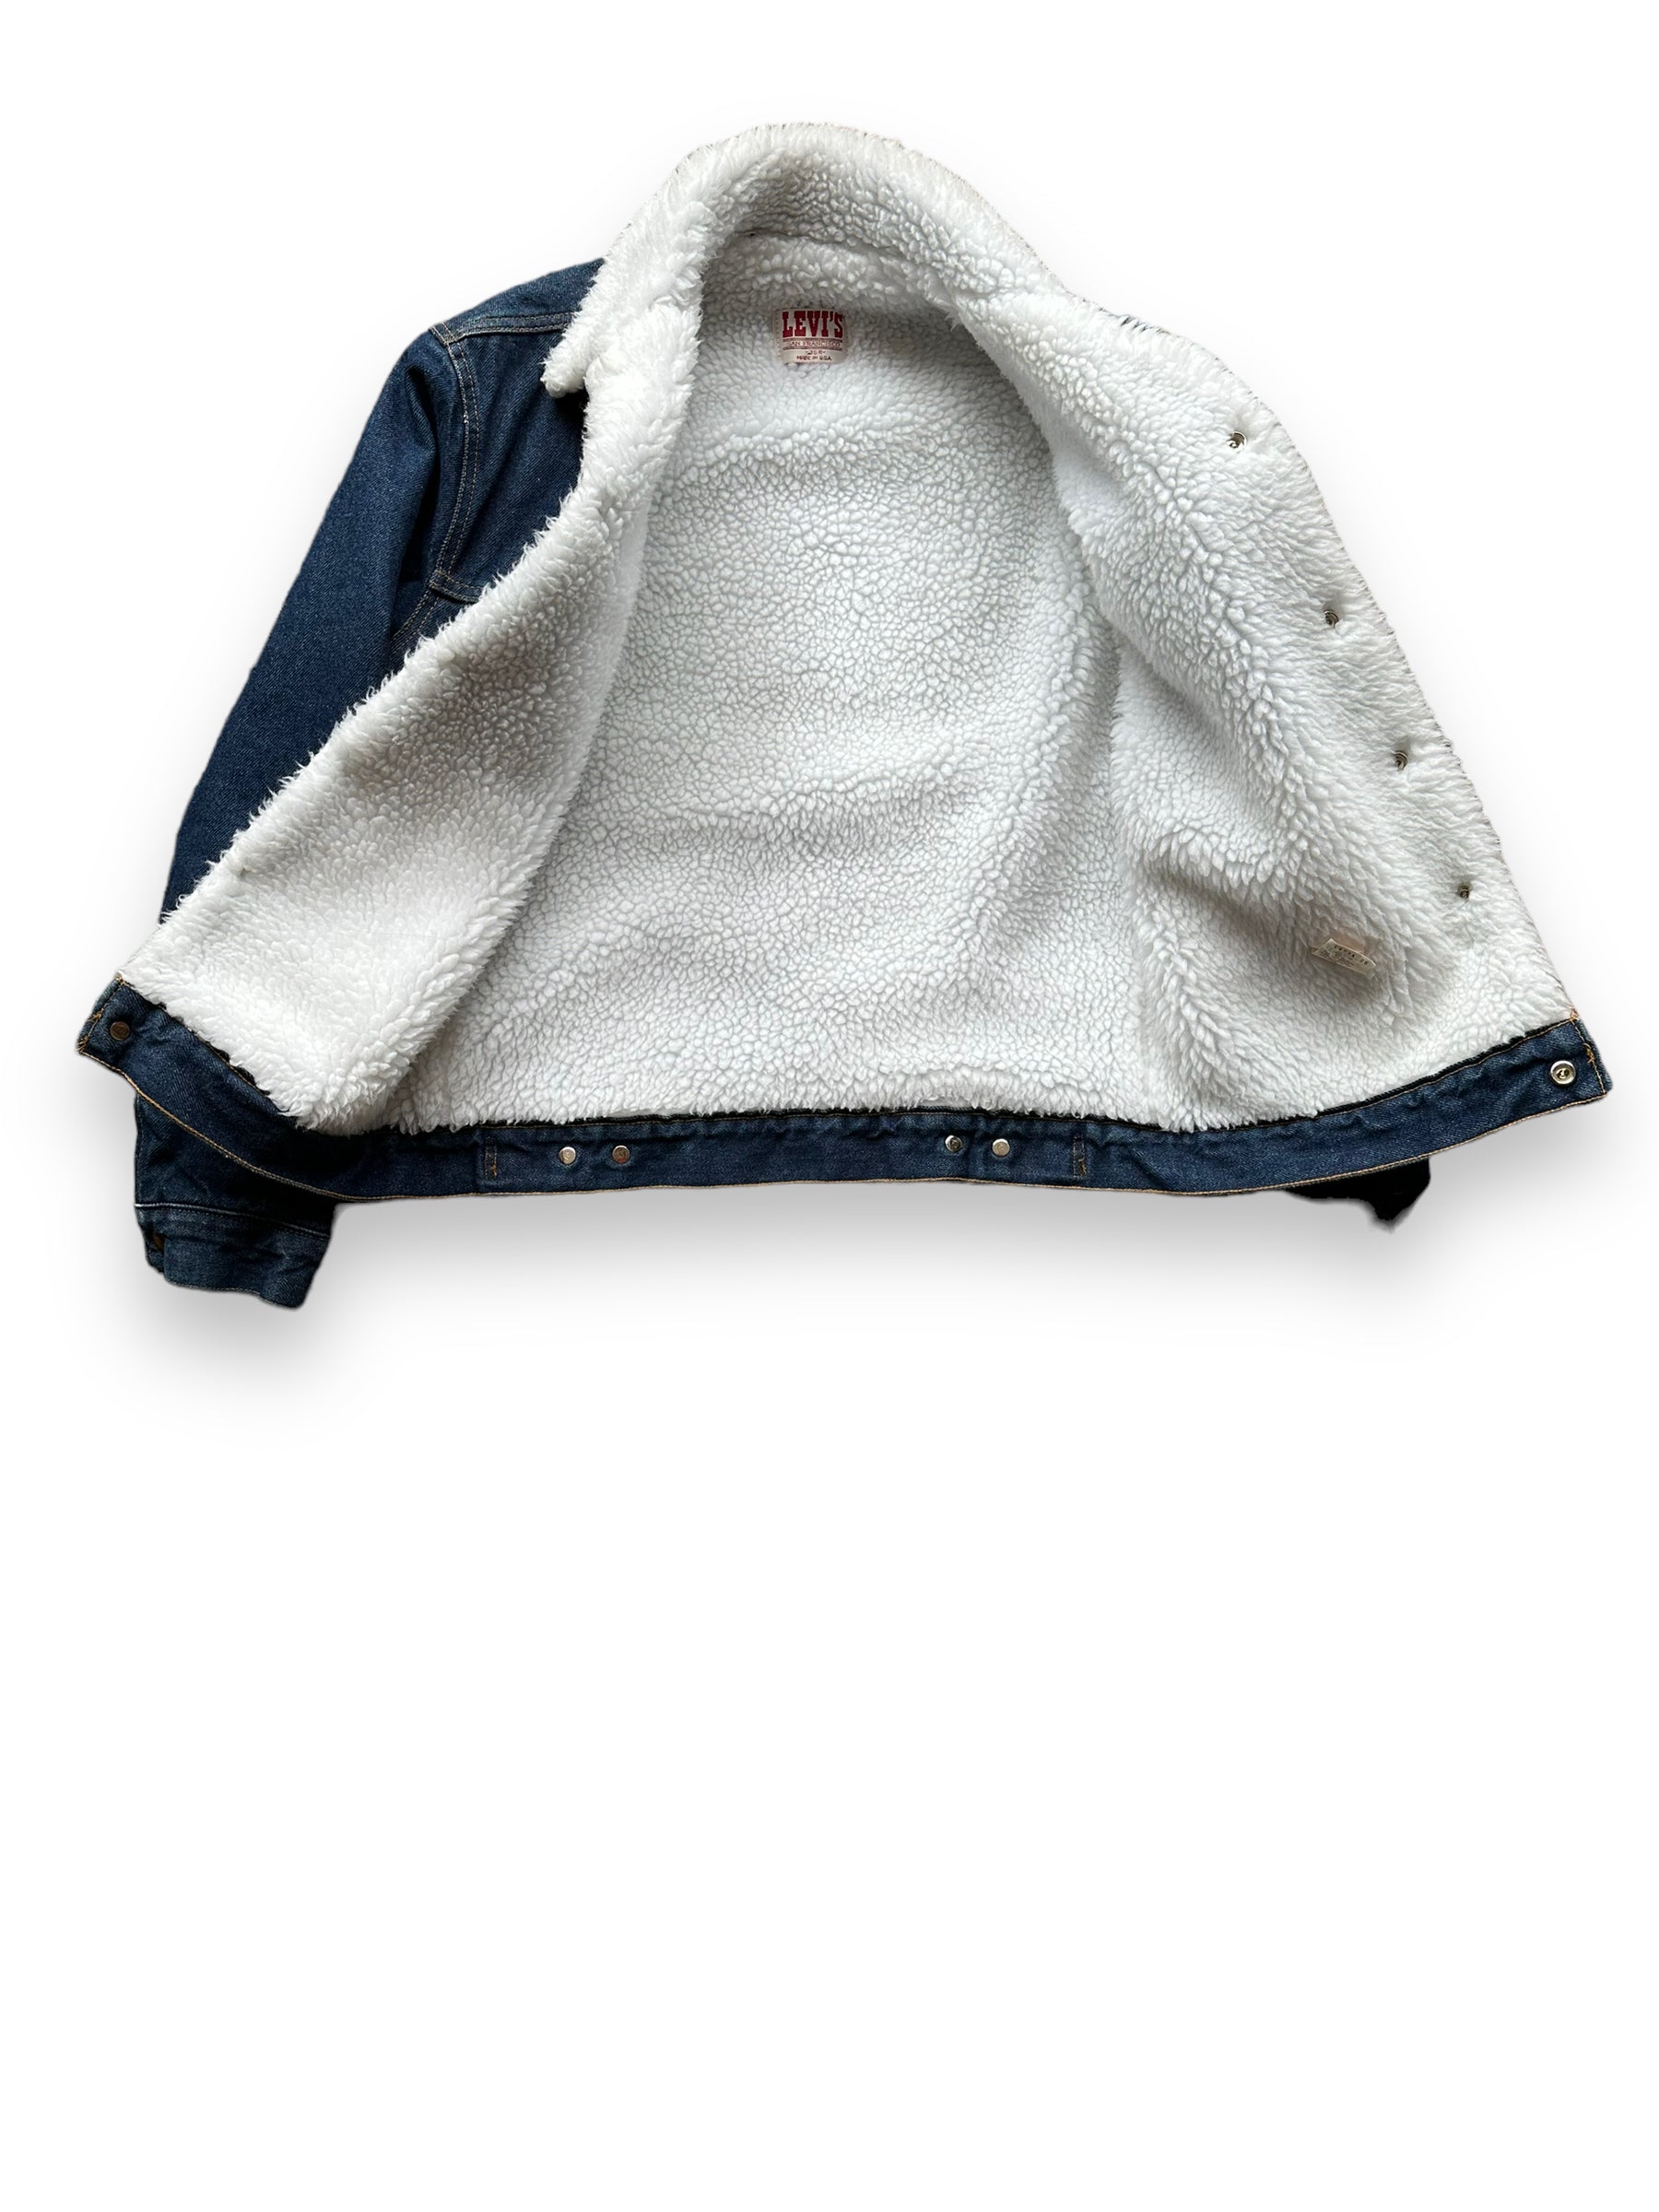 Sherpa Lining on Vintage Dark Wash Levis Sherpa Type III Denim Jacket SZ 36R | Vintage Denim Workwear Seattle | Barn Owl Seattle